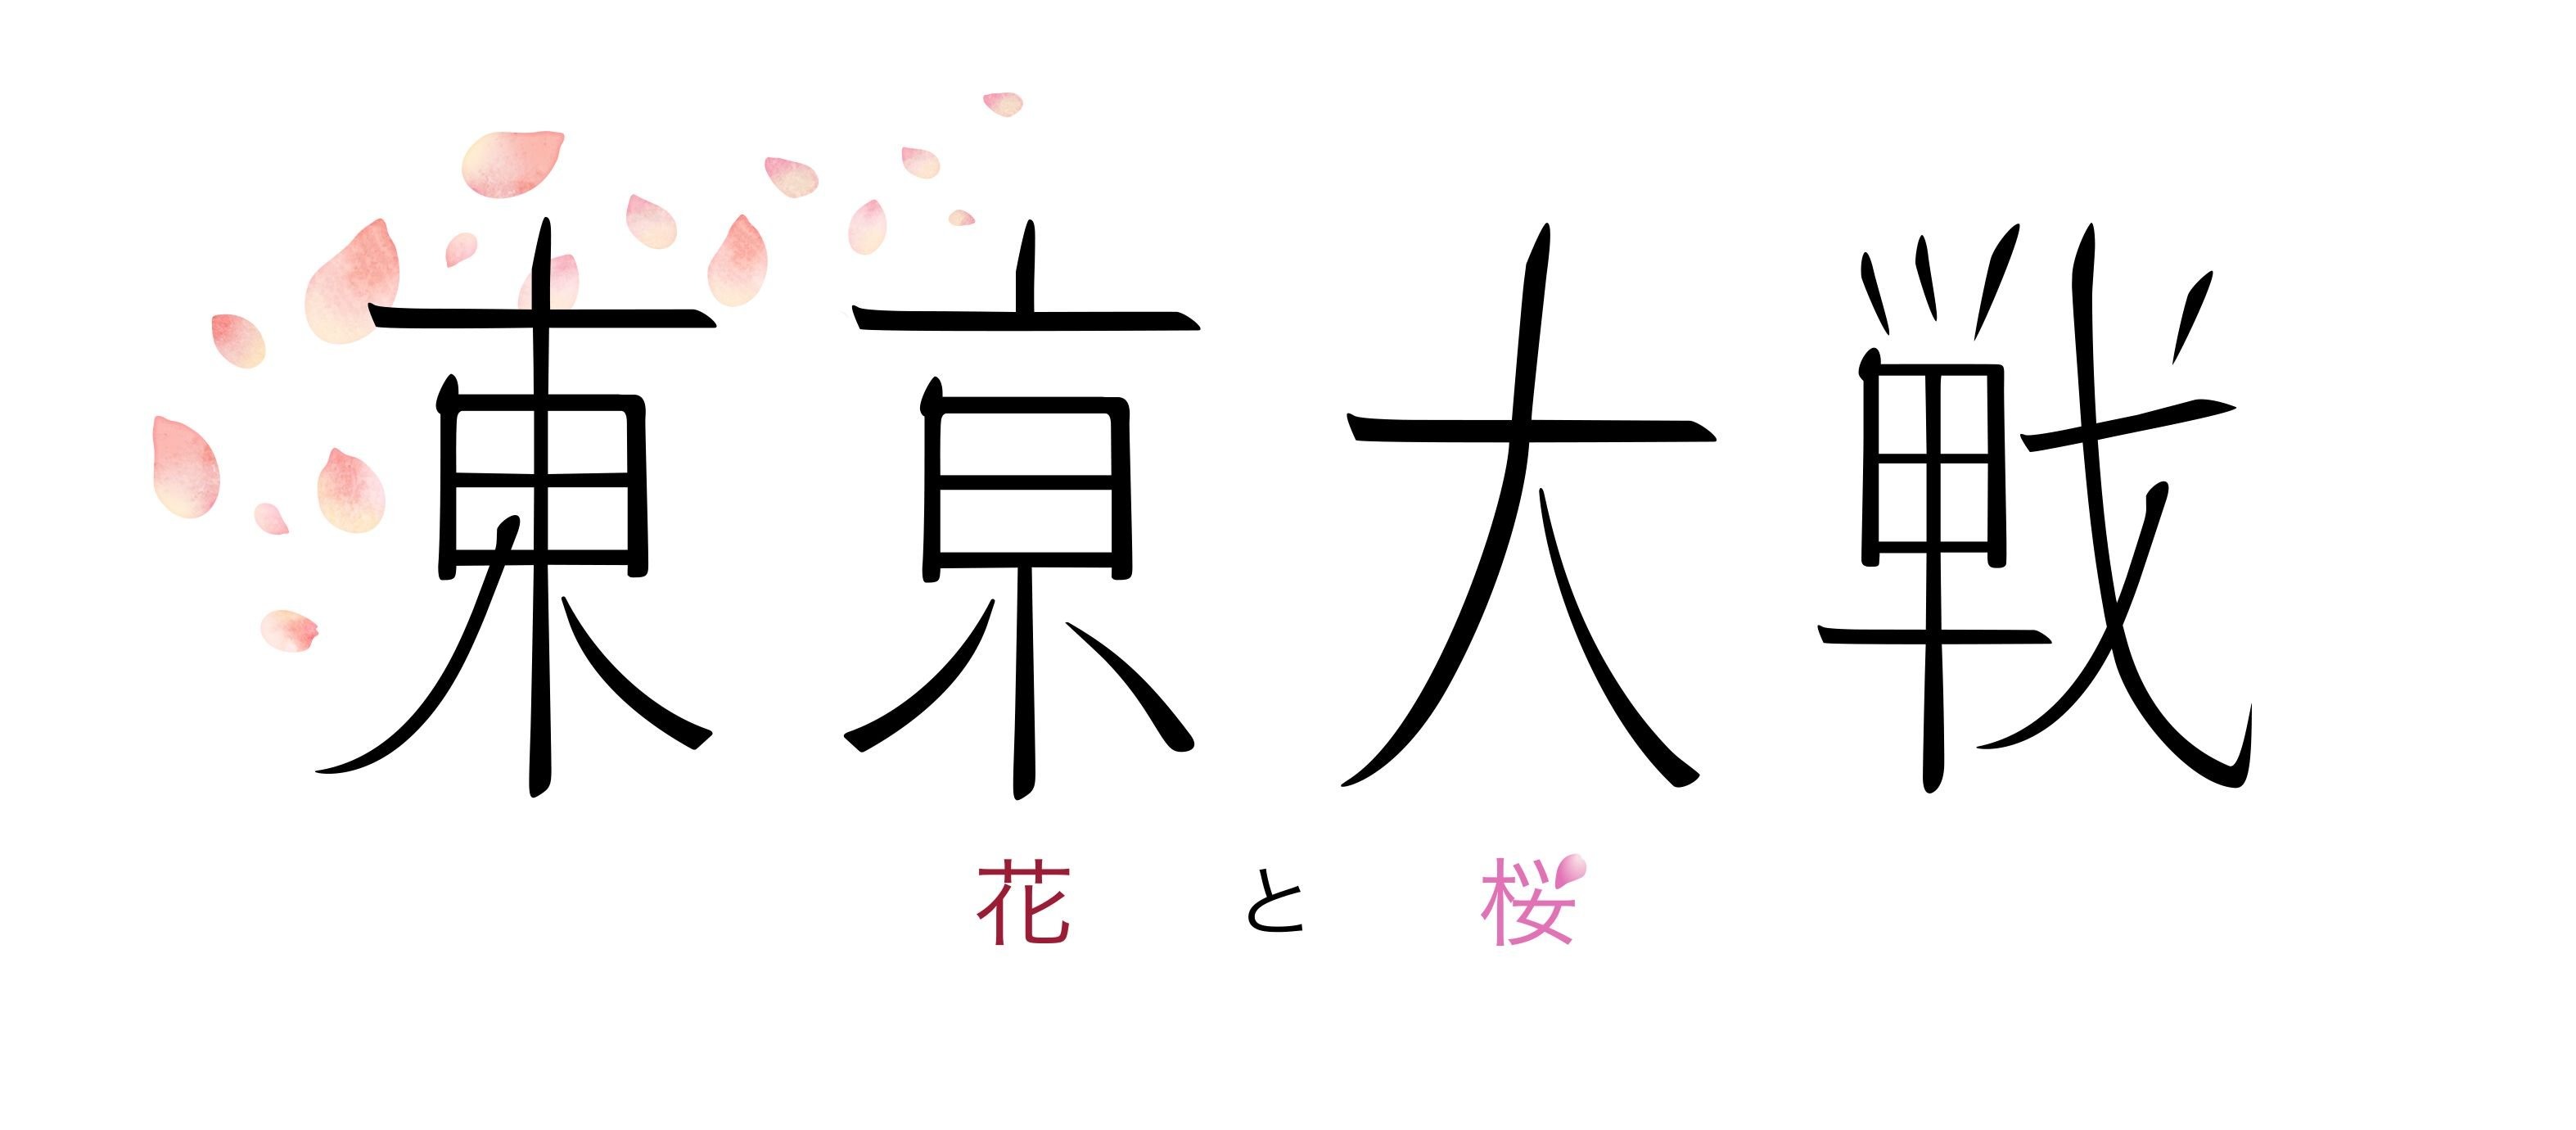 CRETA 发表神秘新作《东京大战 花与樱》 广井王子、宫路洋一等老牌创作者现身会场 其他插图